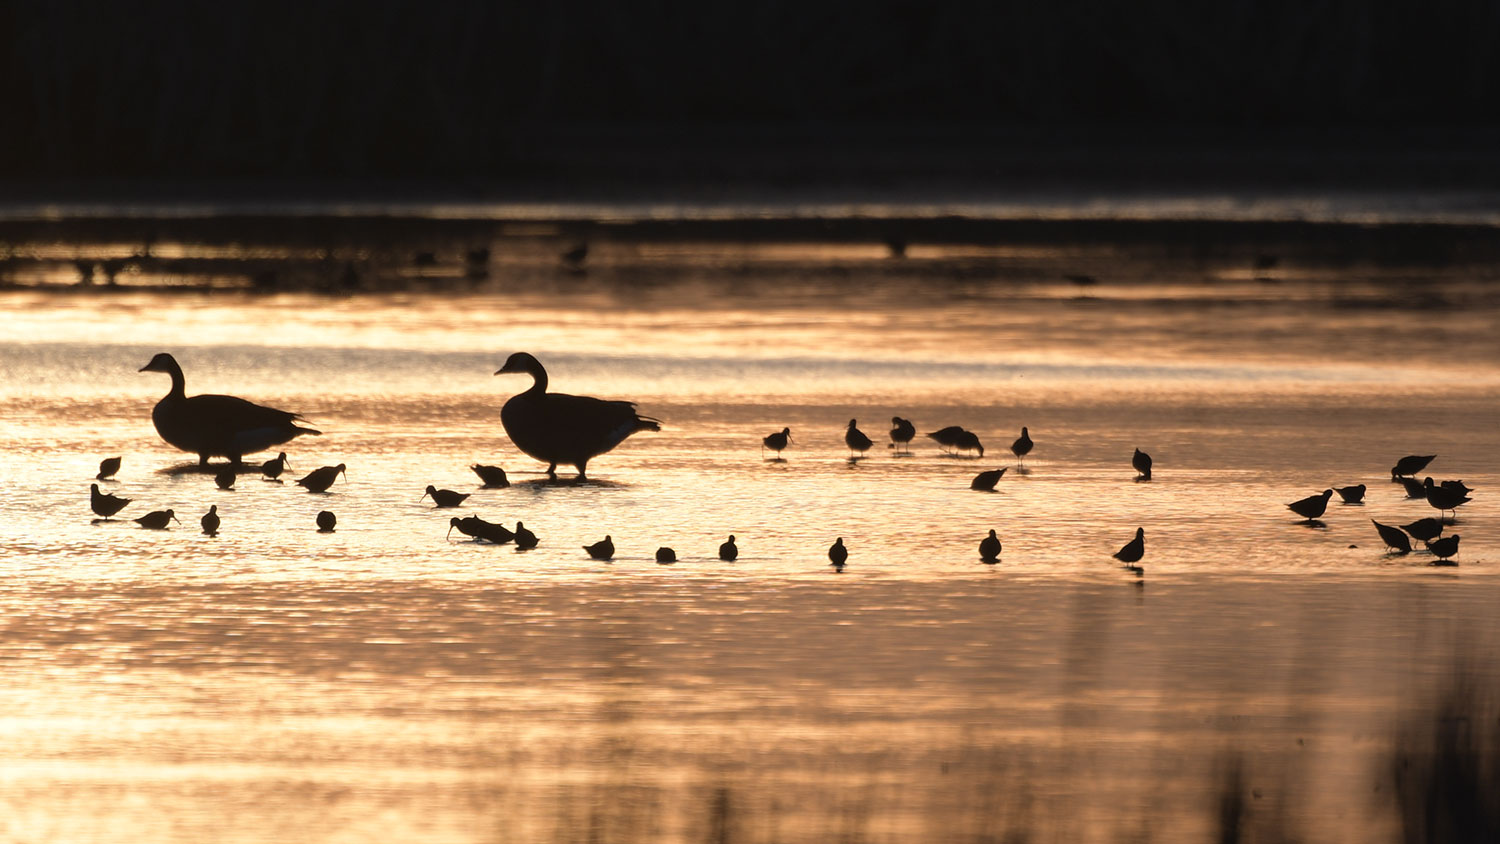 Birds in a wetland at sunrise